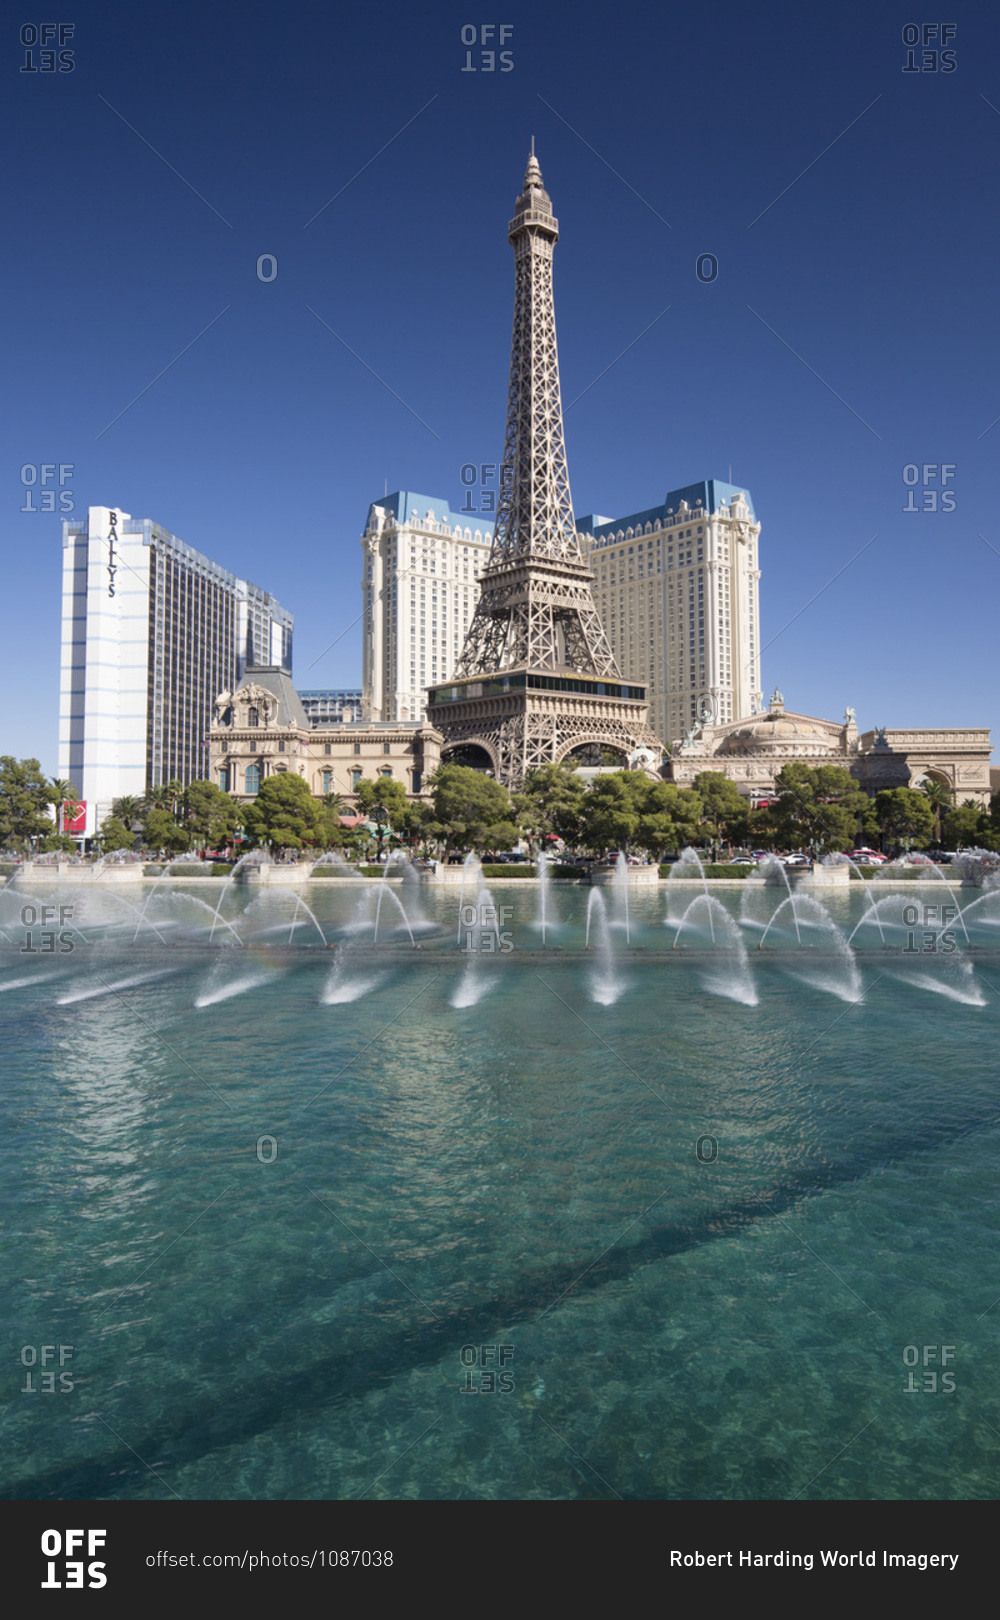 Eiffel Tower Replica at Paris Hotel and Casino Editorial Photo